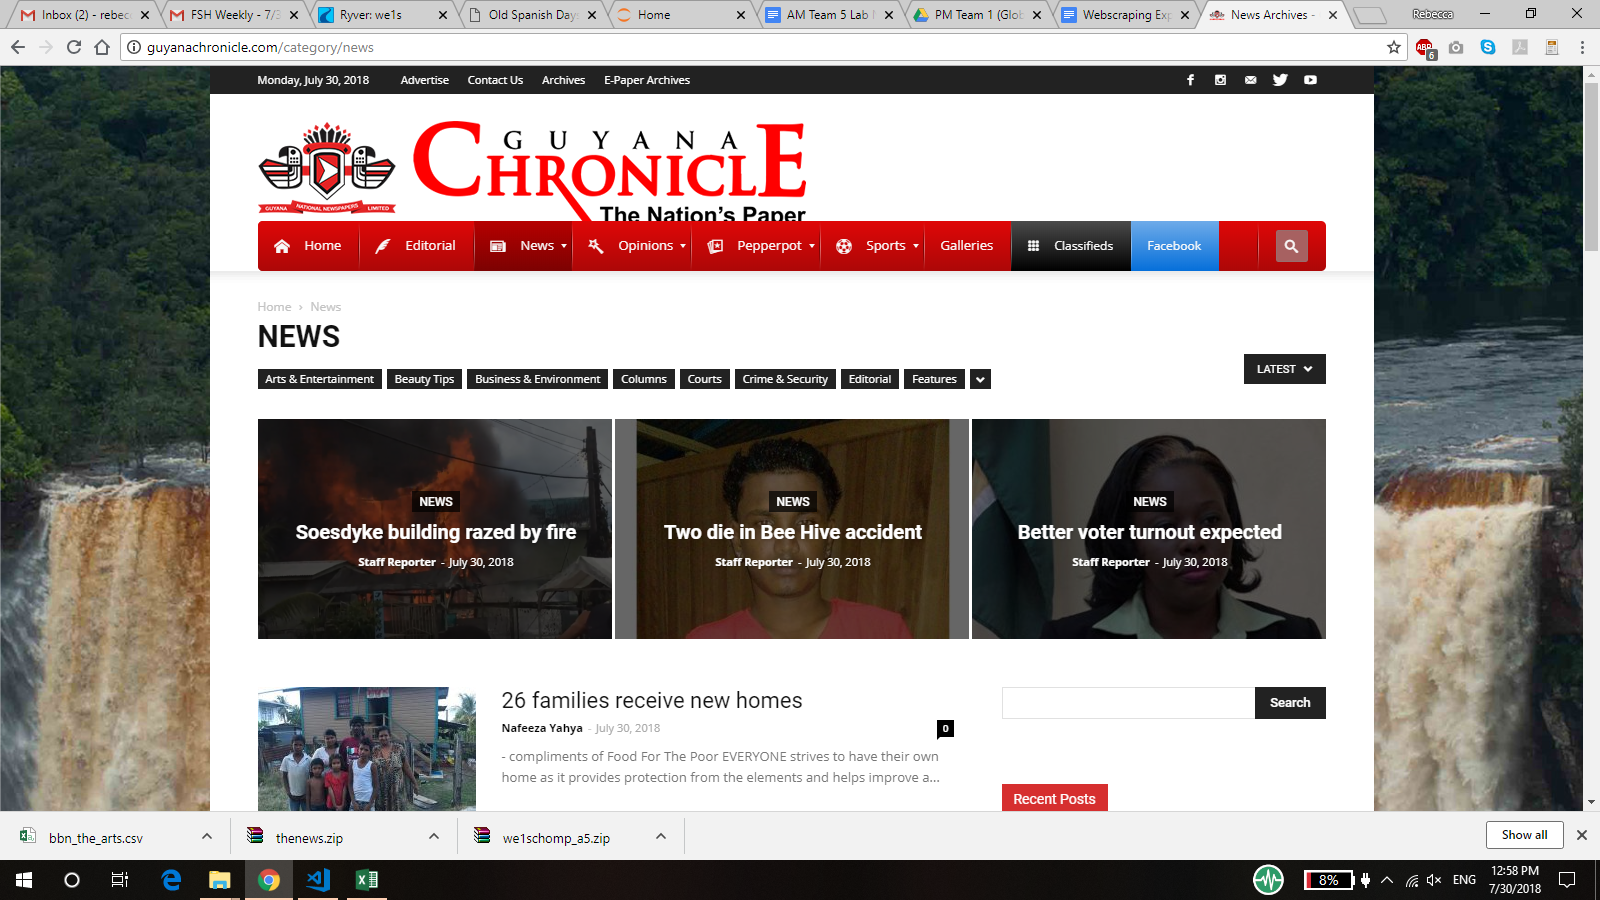 Guyana Chronicle homepage